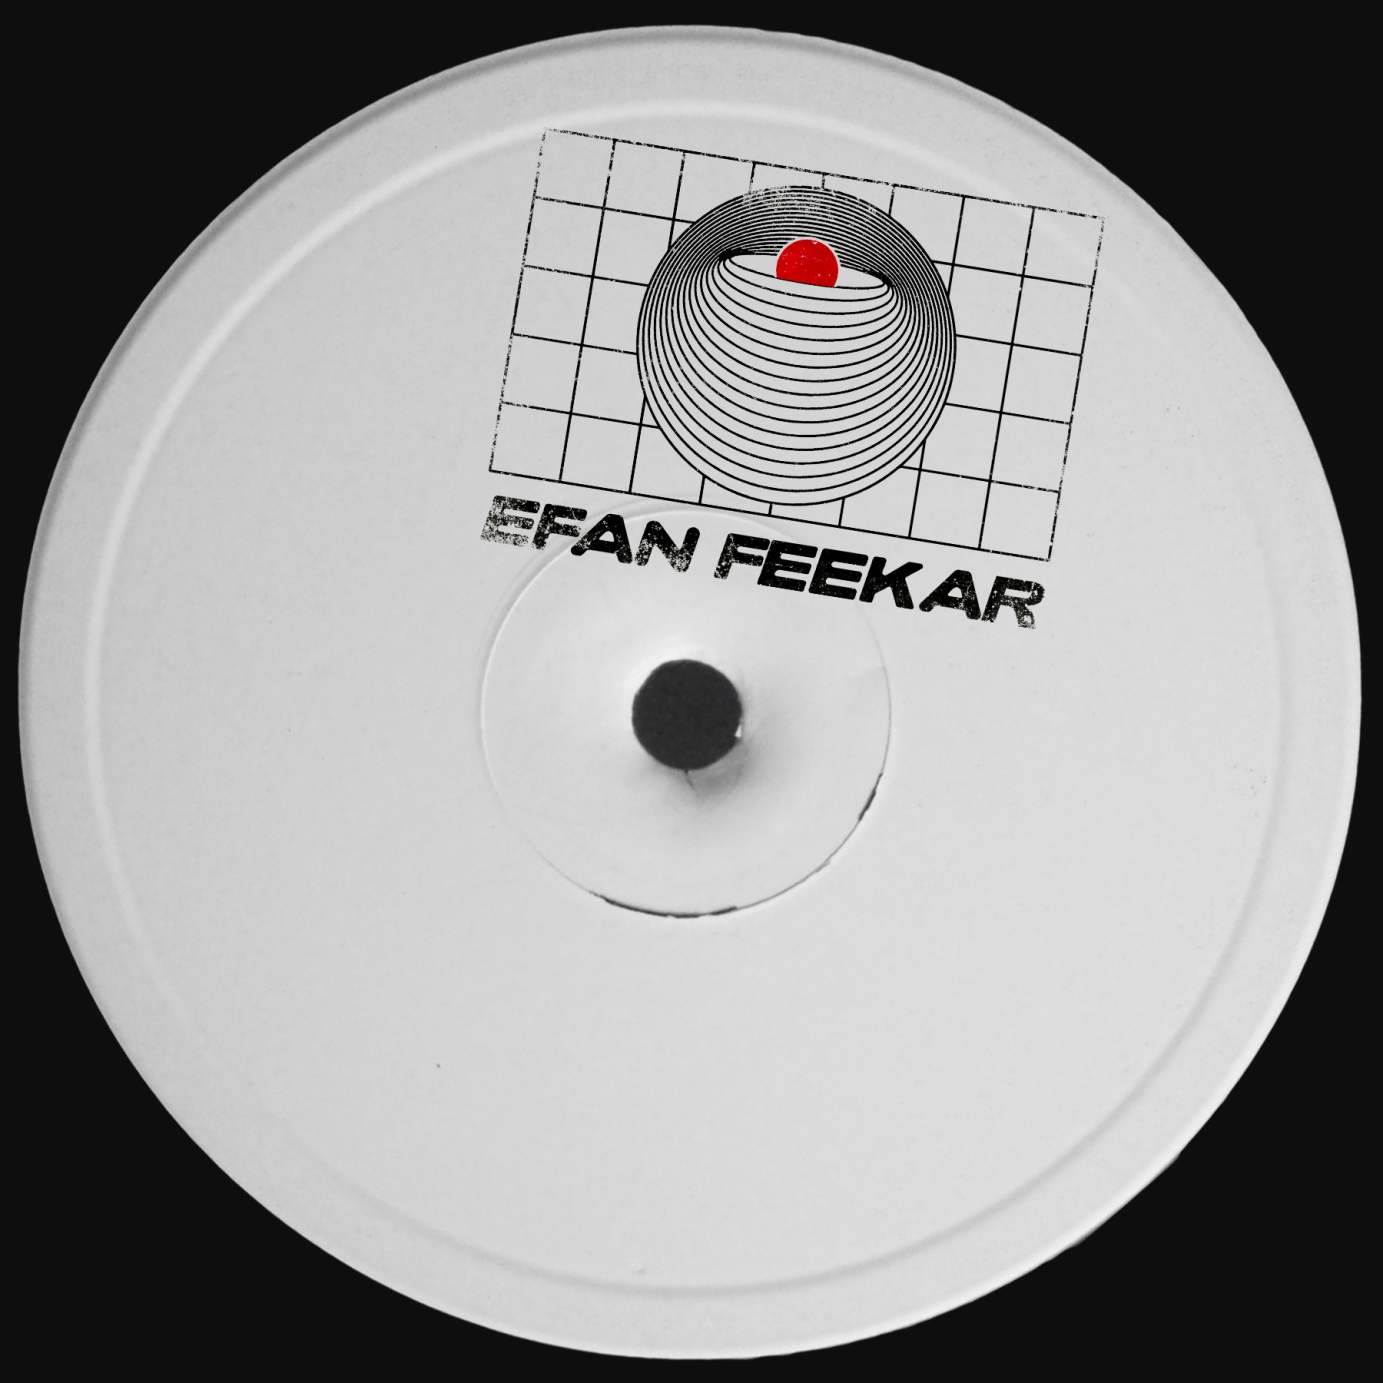 Efan Feekar Logo and Sticker Mockups